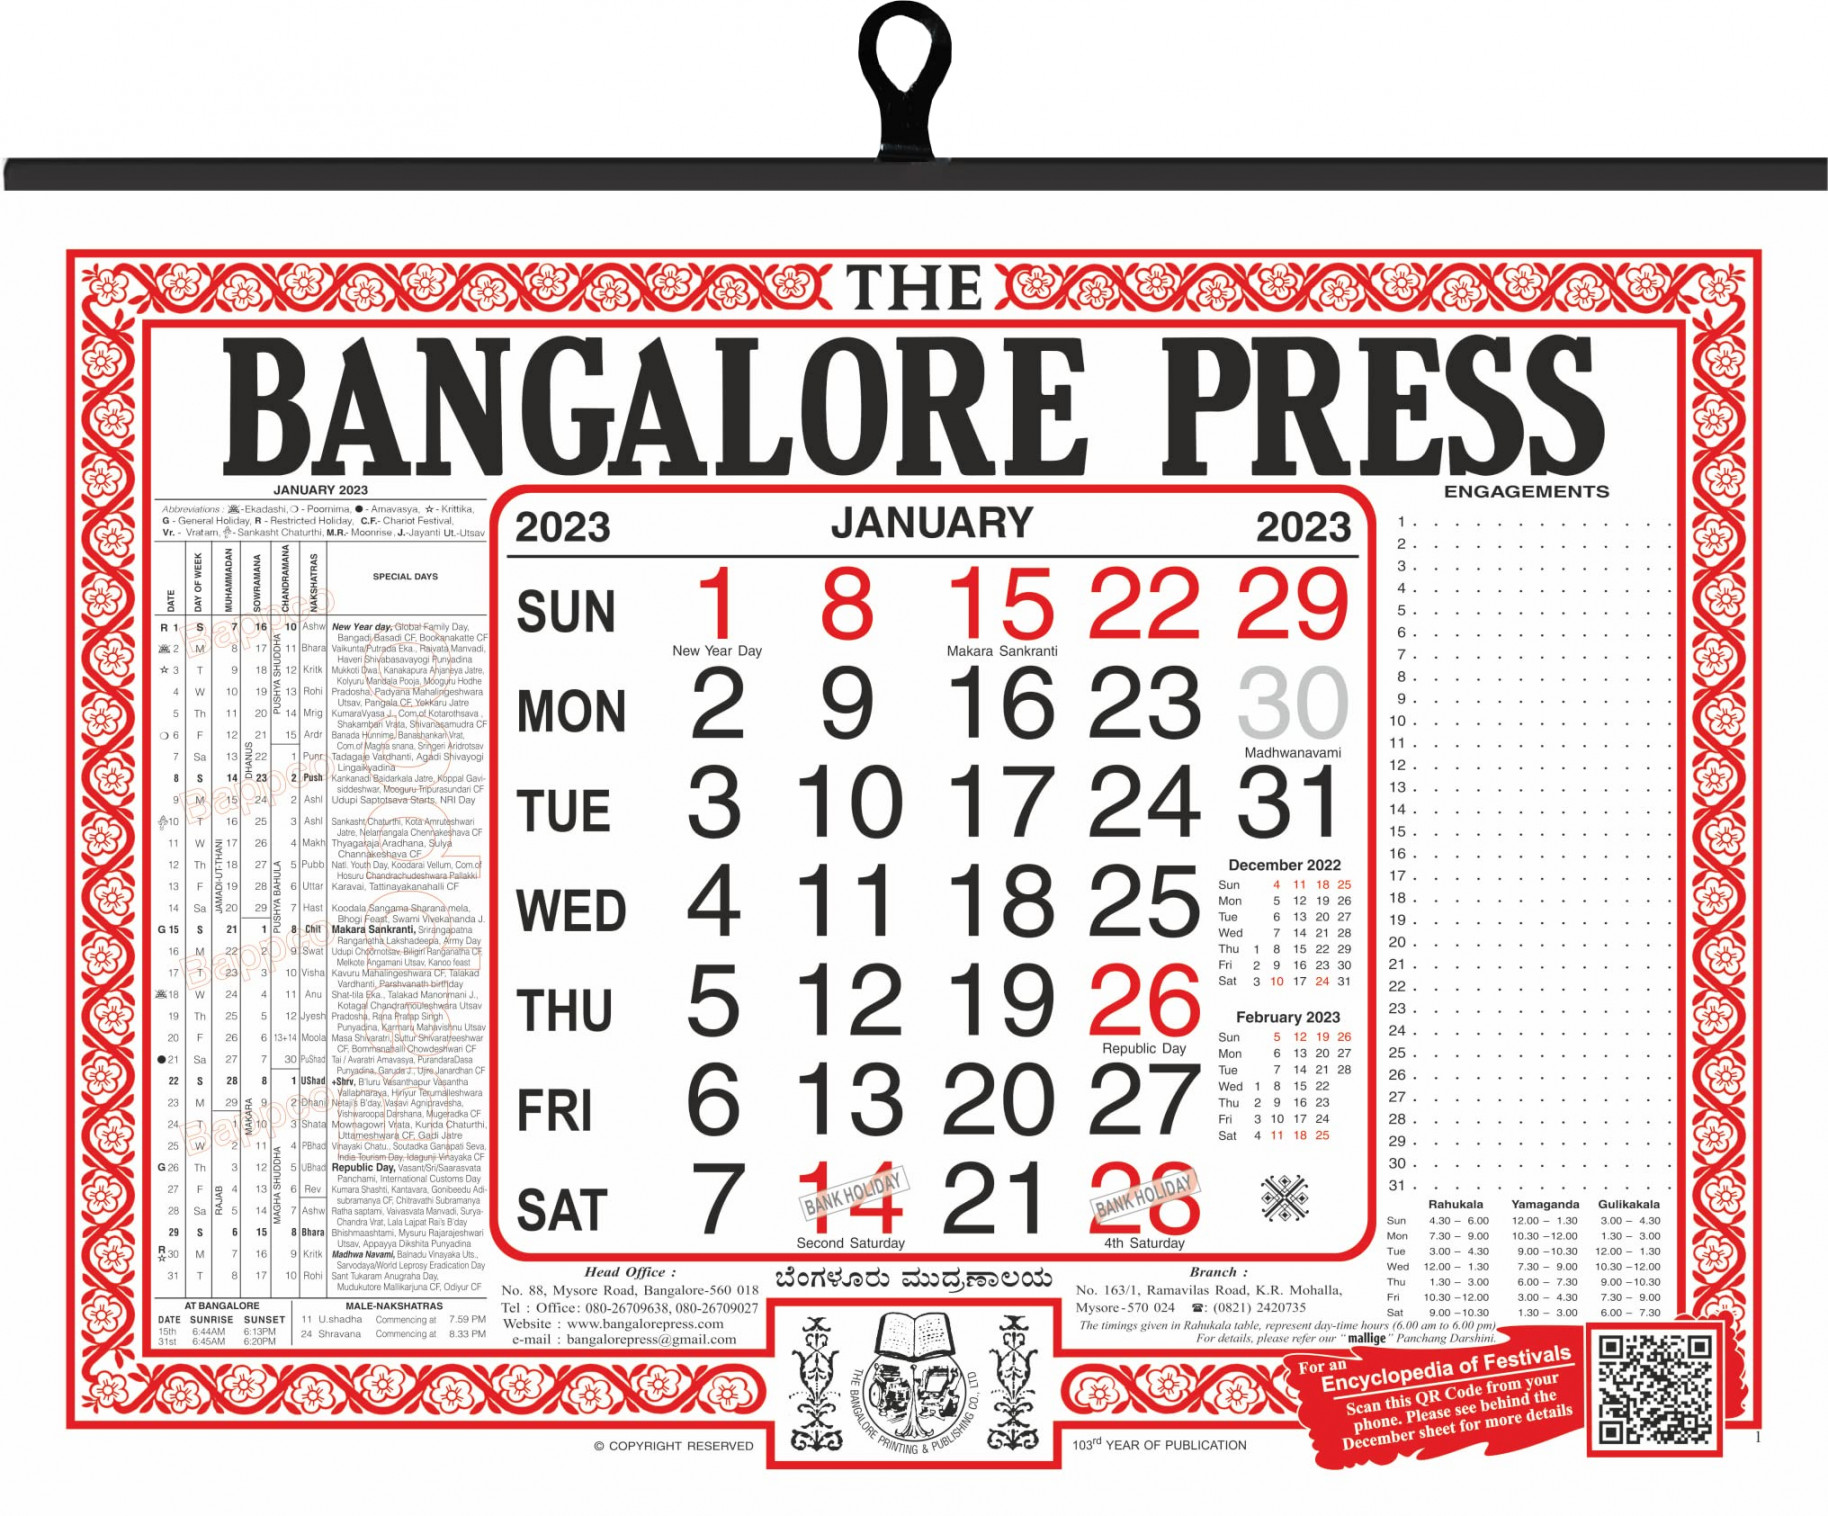 THE BANGALORE PRESS English Wall Calendar -  - (Pack of